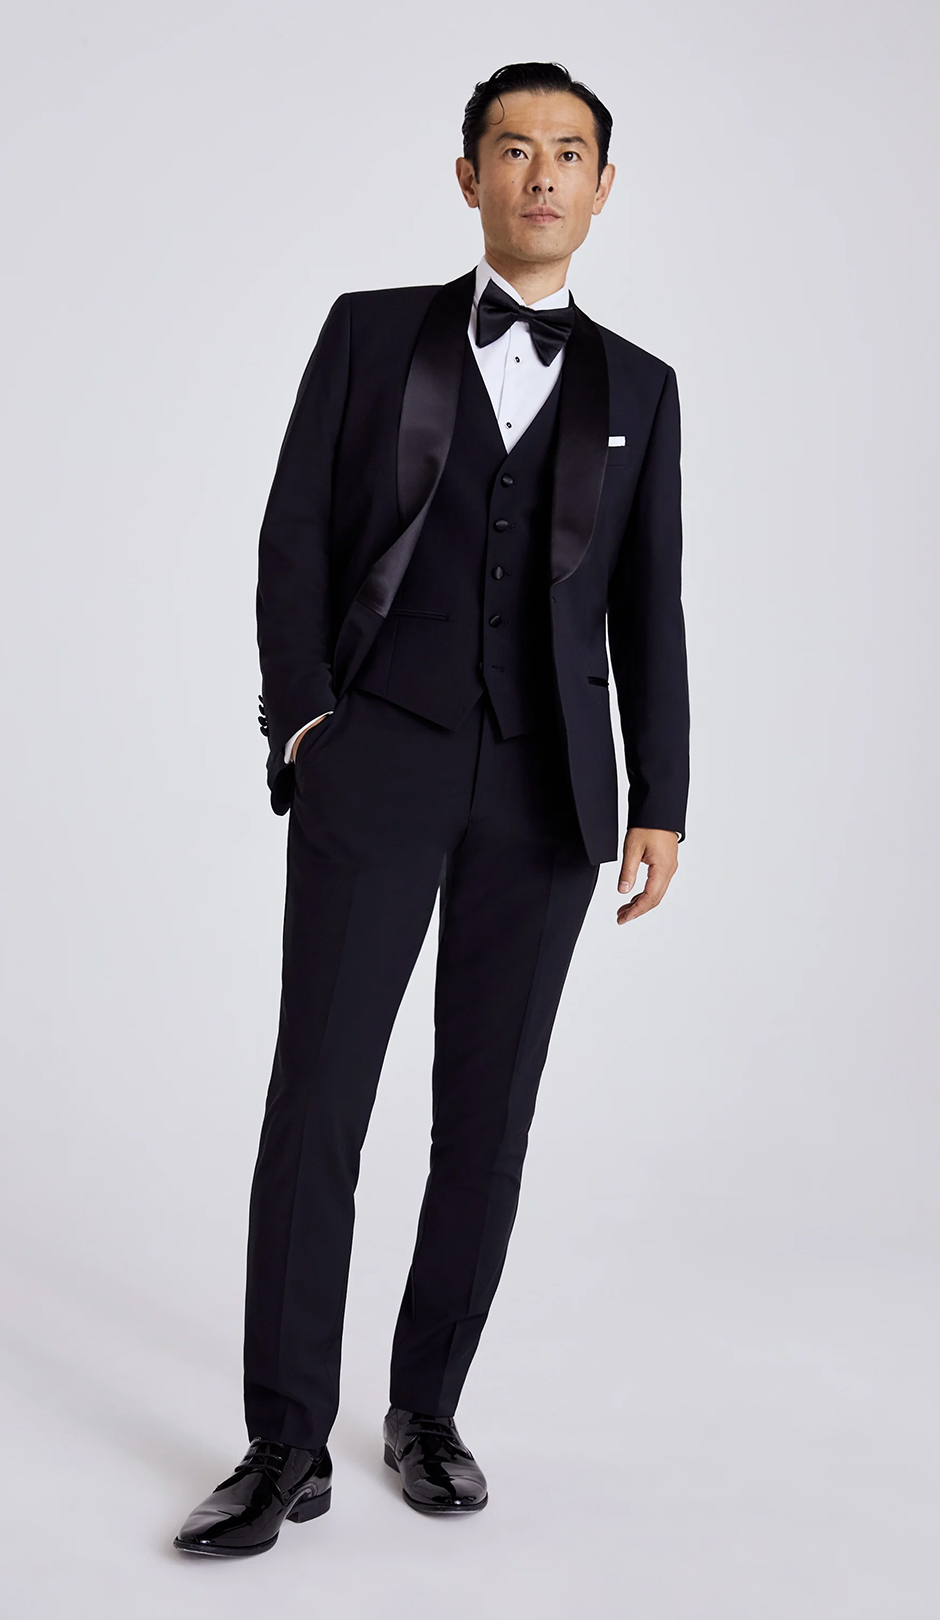 Moss Bros model wearing black tie wedding suit for groom